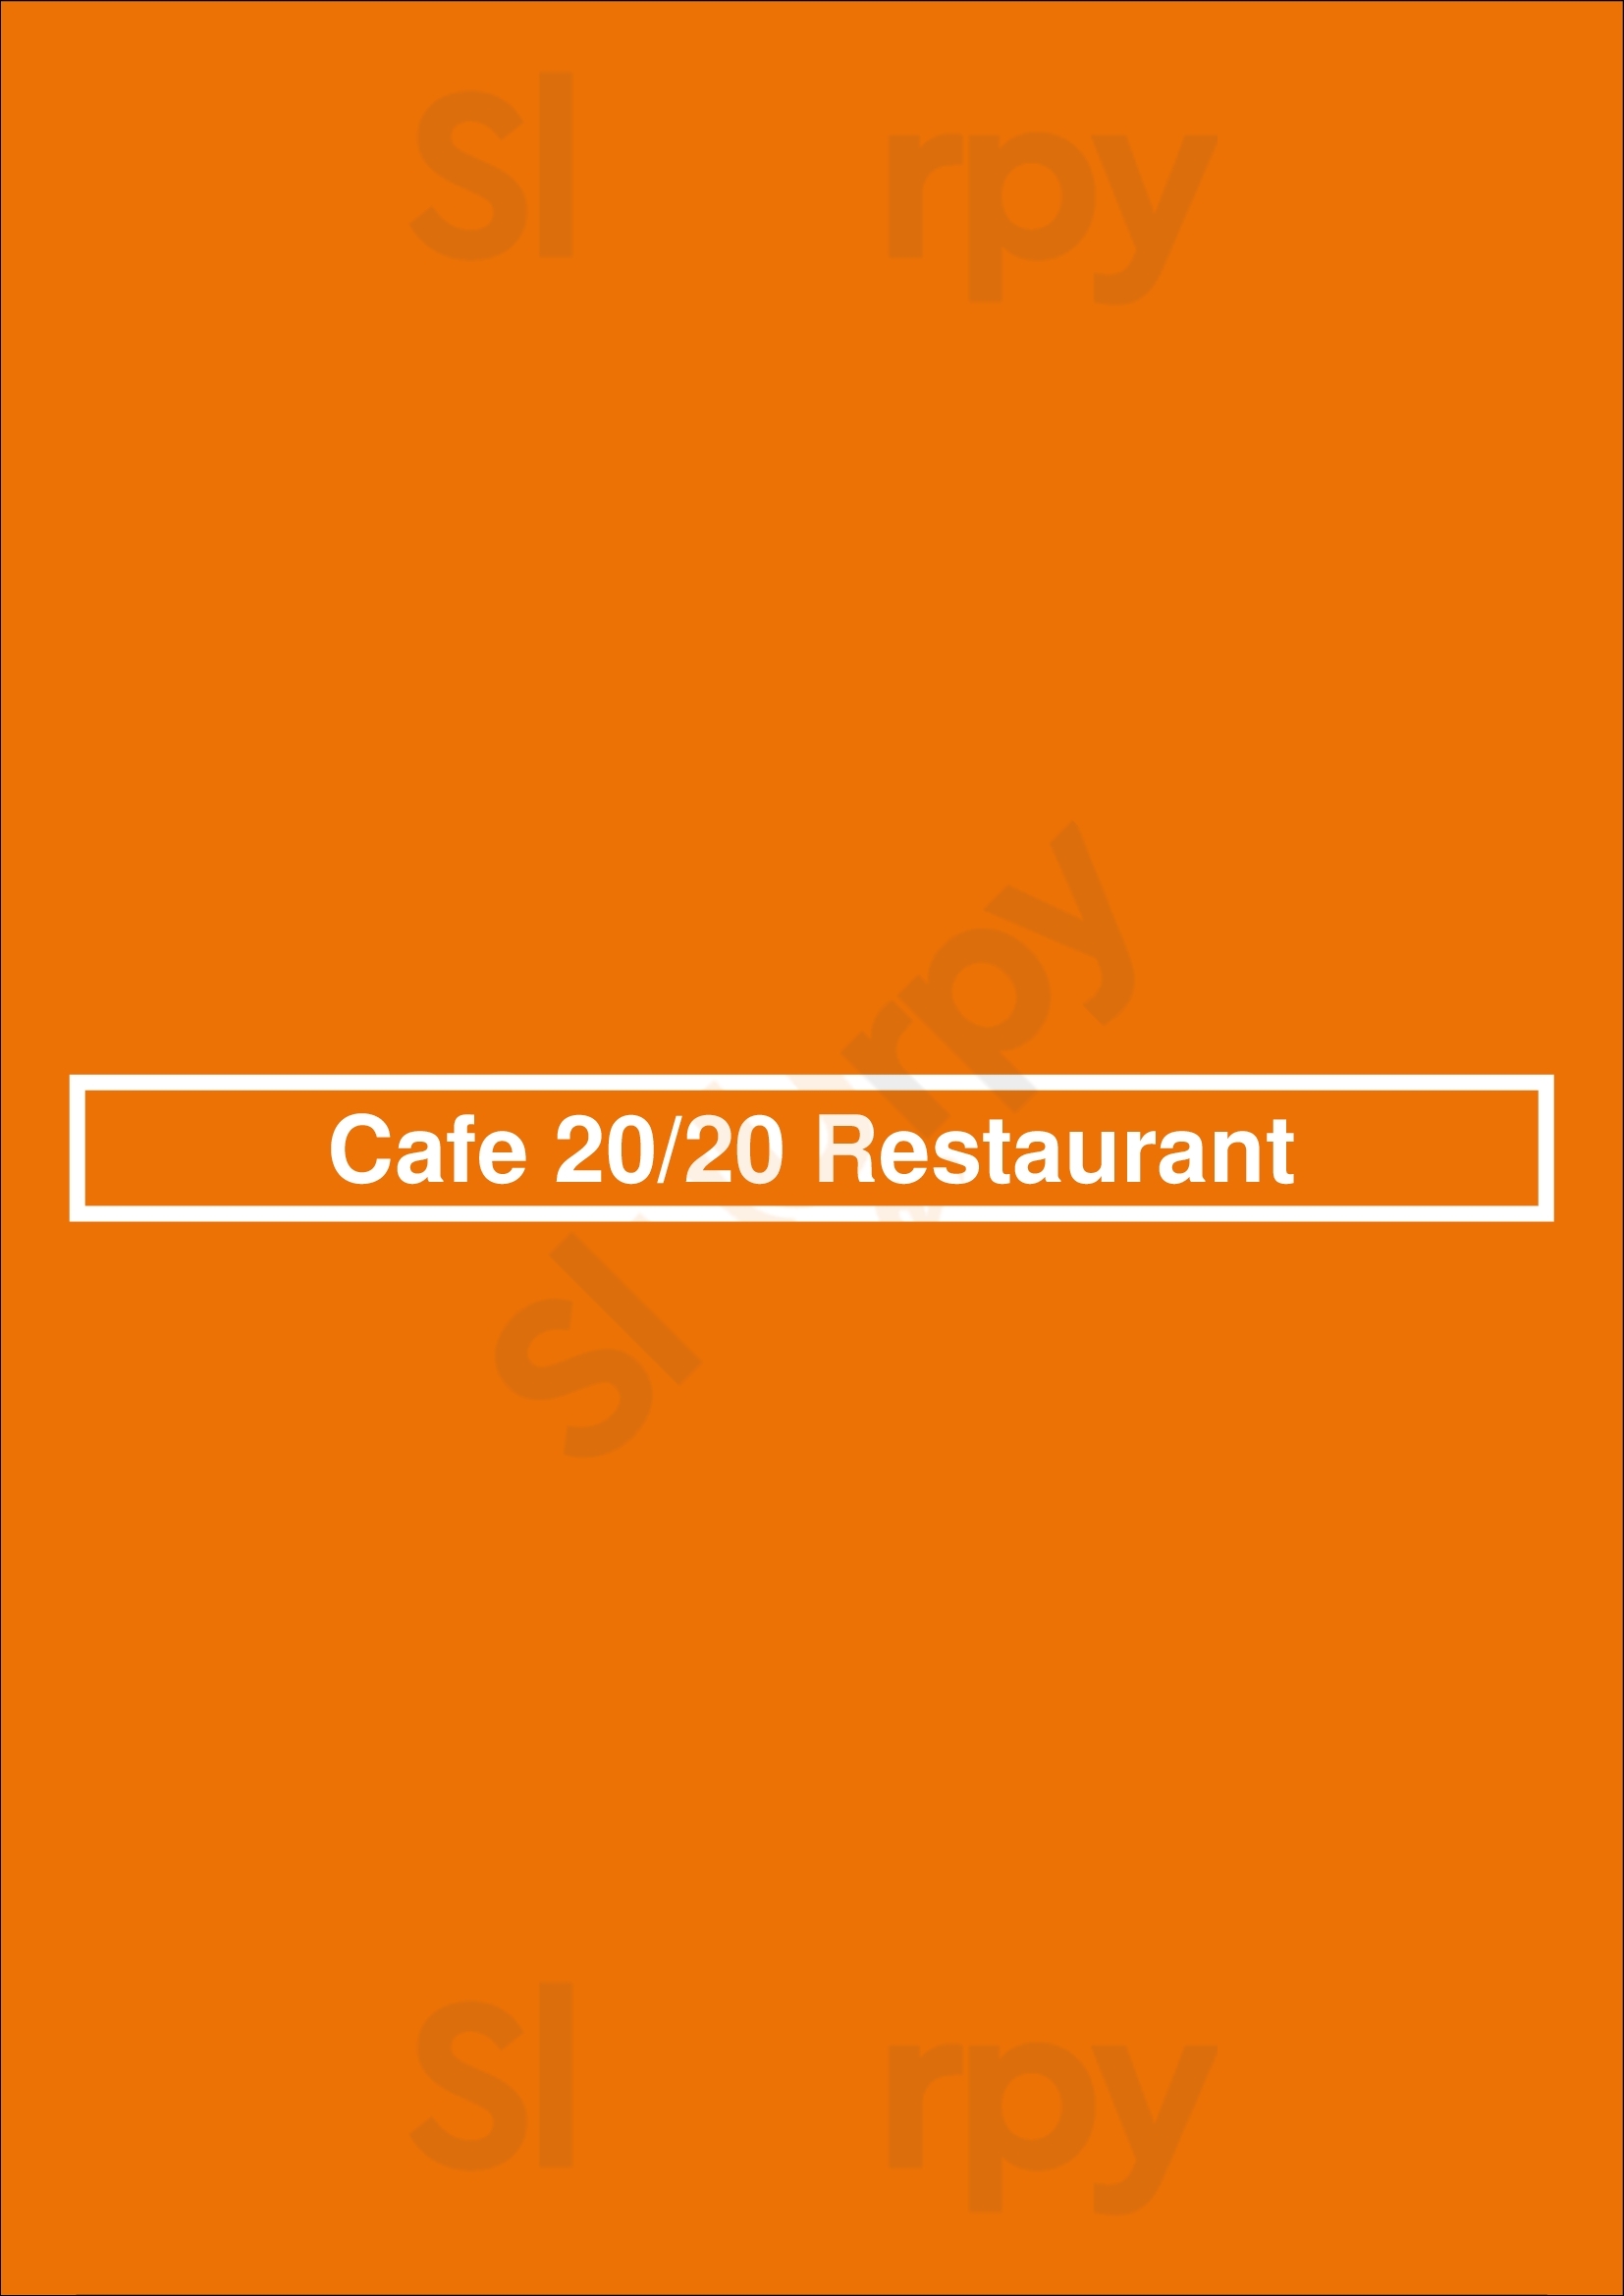 Cafe 20/20 Restaurant San Diego Menu - 1